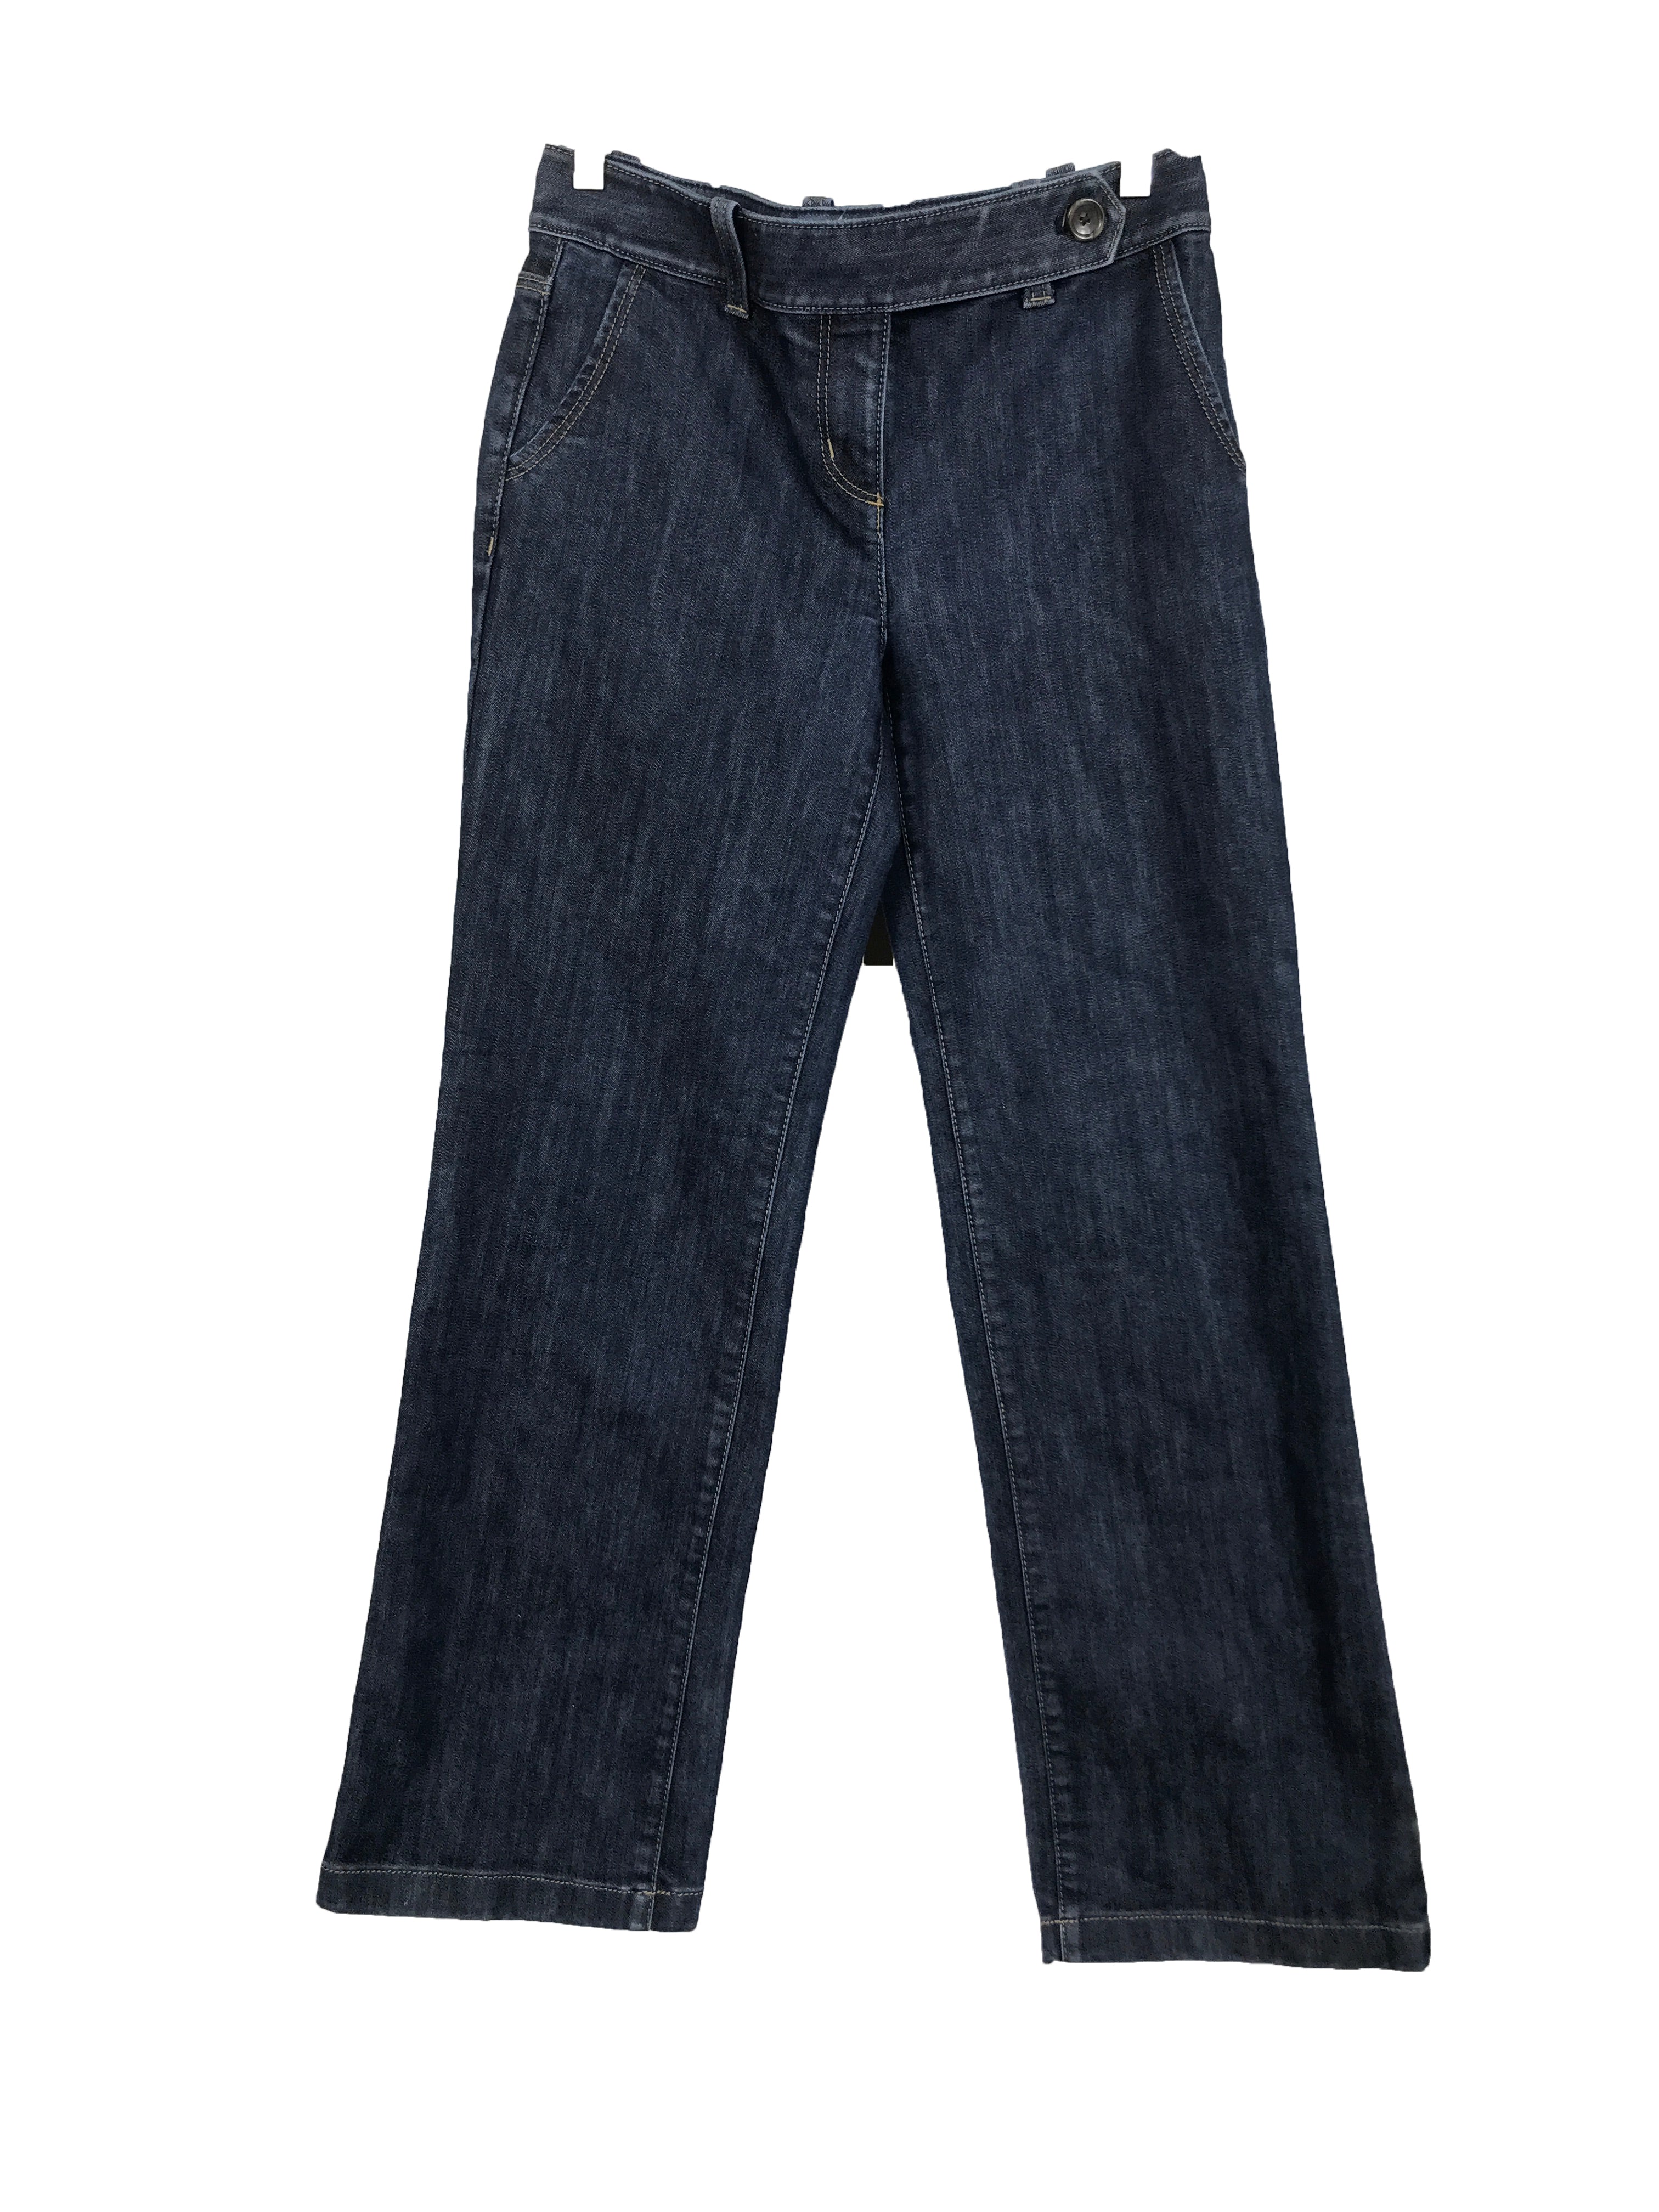 Ann Taylor Original Fit Margo Waist Jeans Women's Size 4